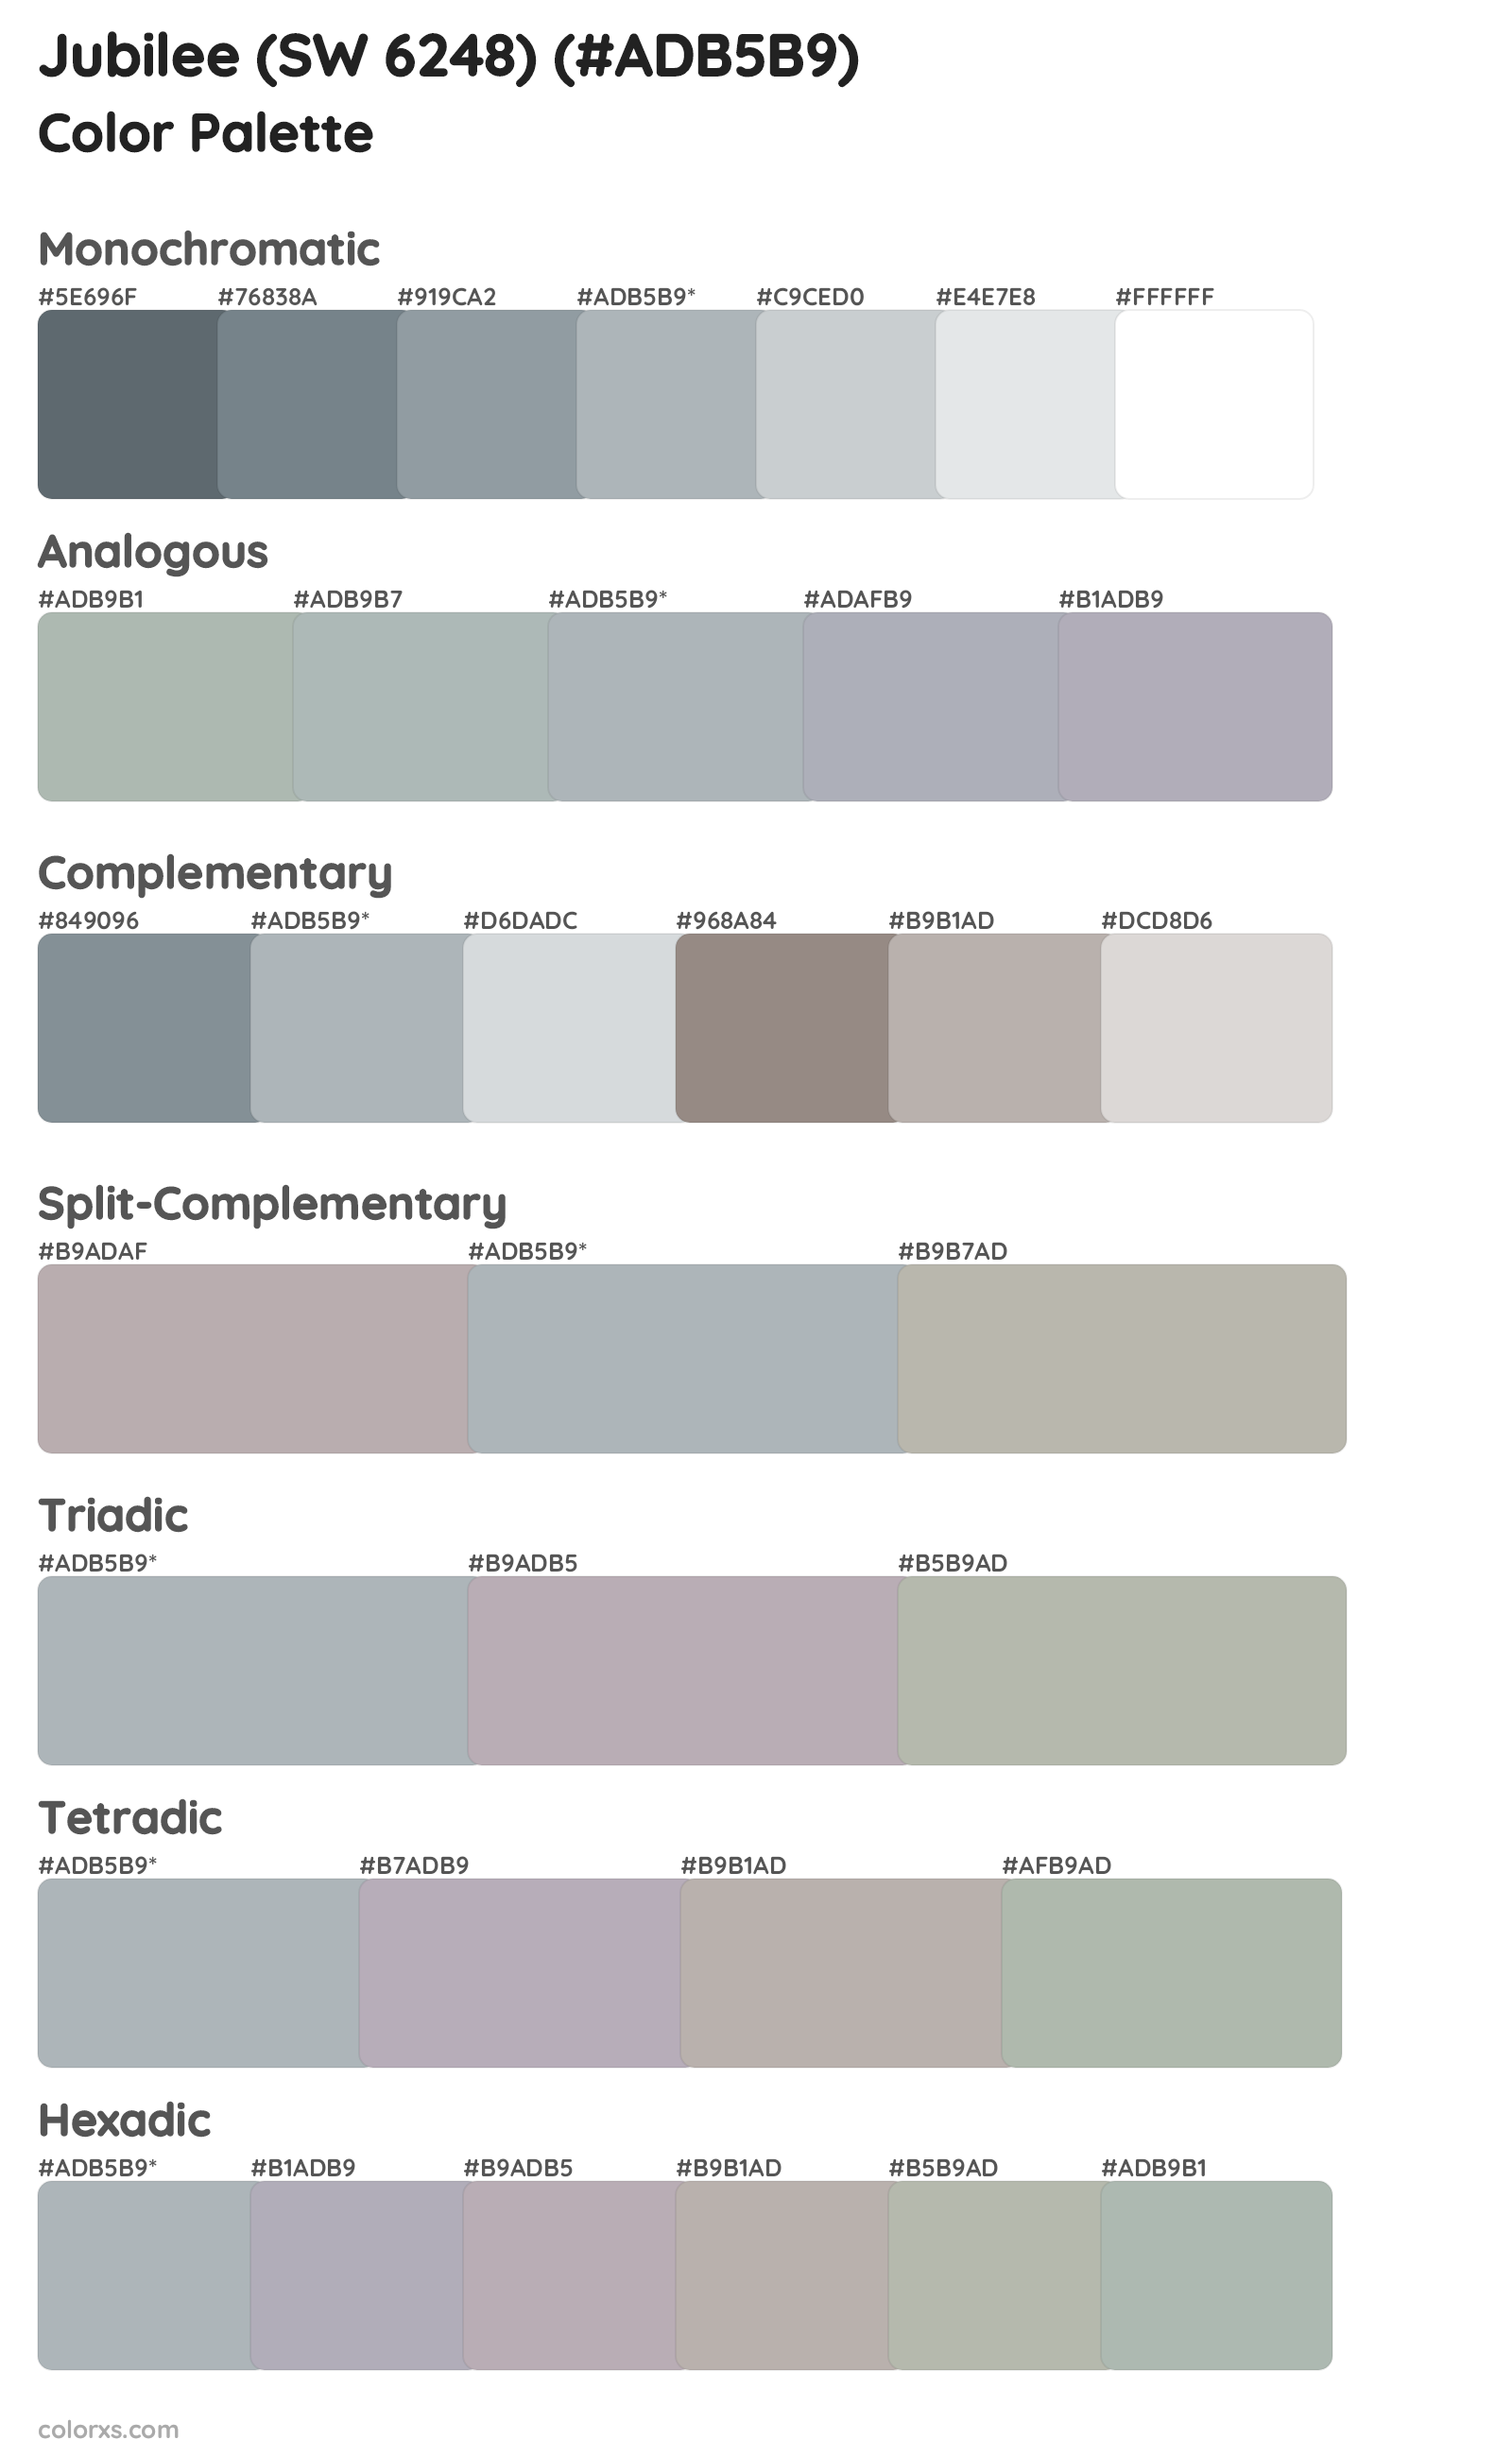 Jubilee (SW 6248) Color Scheme Palettes